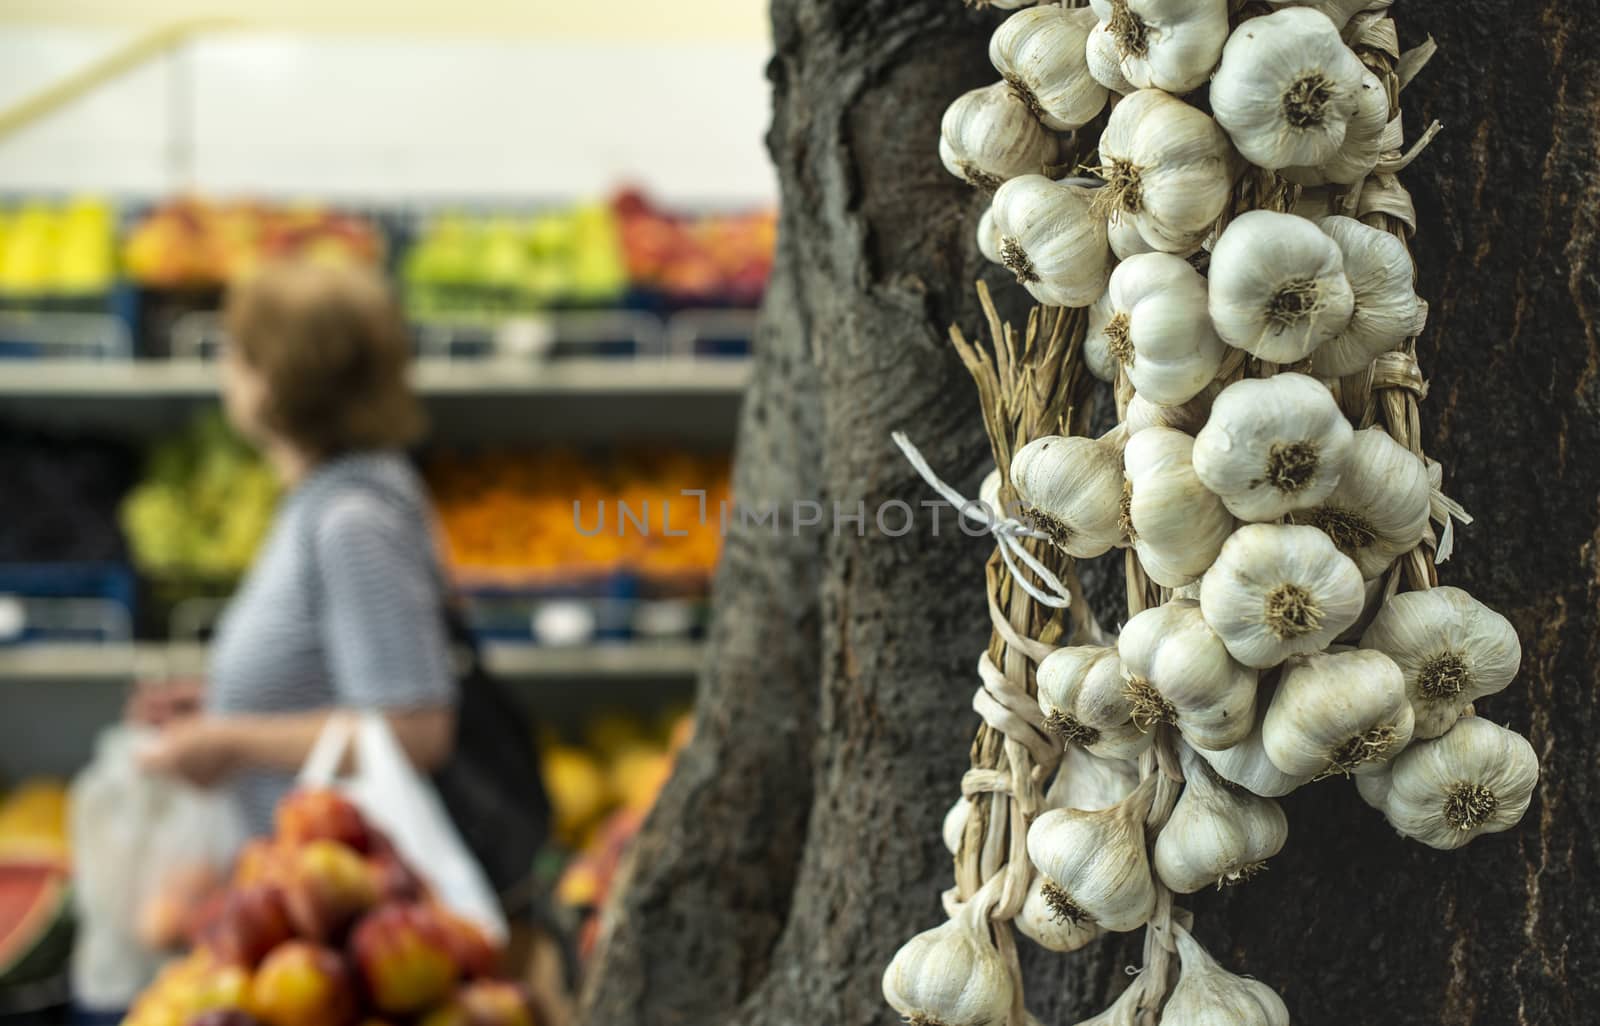 Bundle garlic hung on hang in vegetable market.